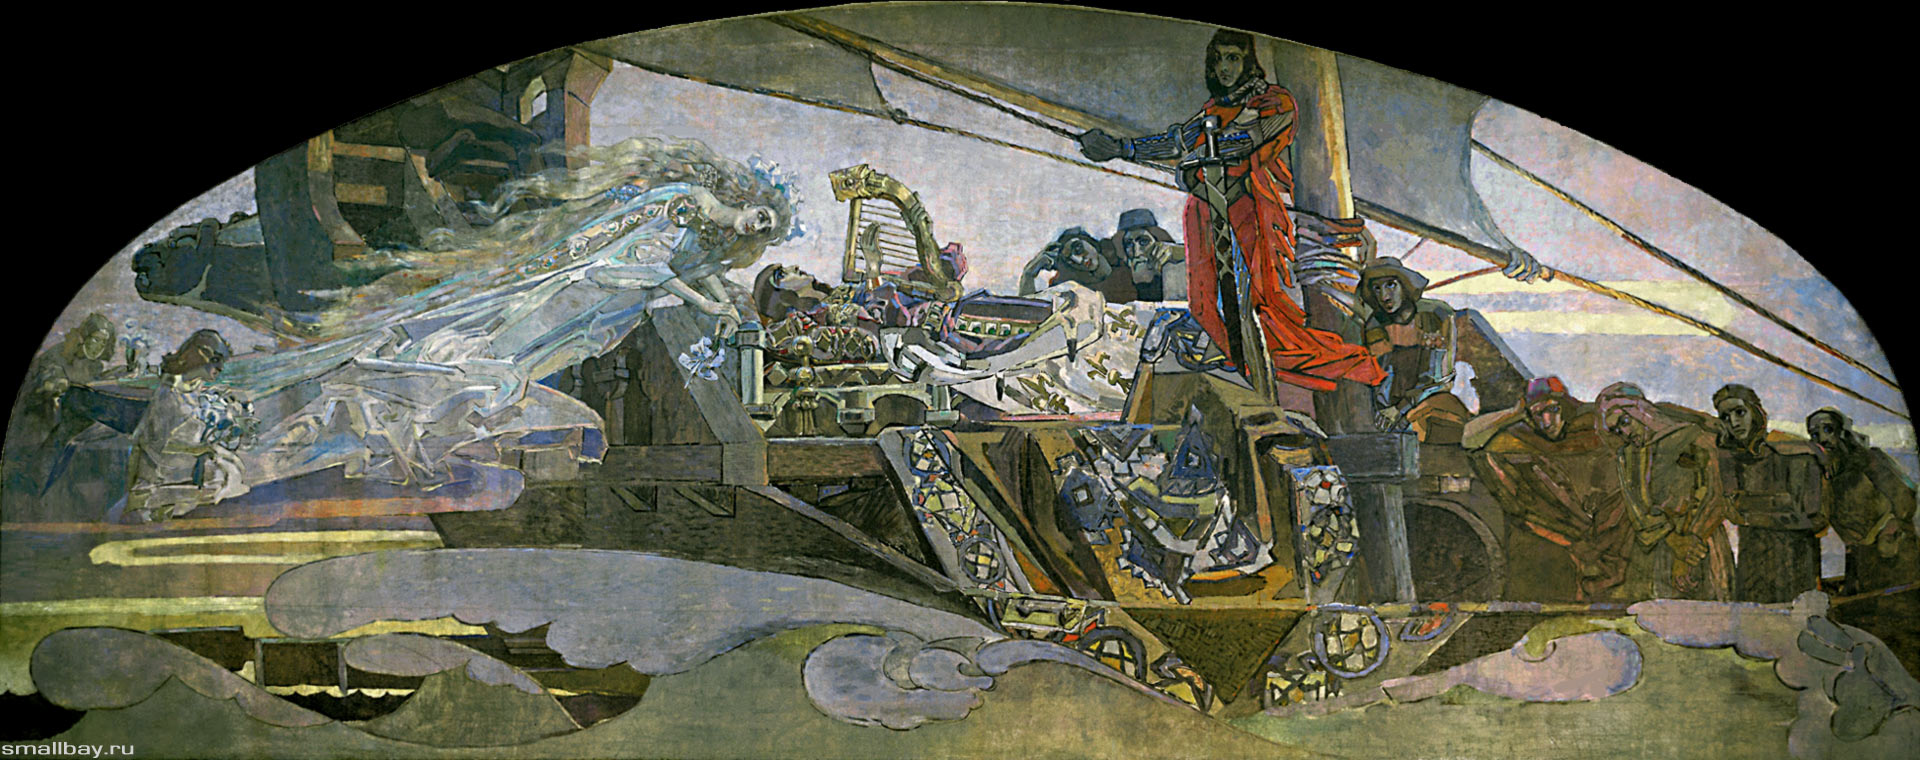 Врубель Михаил, картина "Принцесса Грёза"